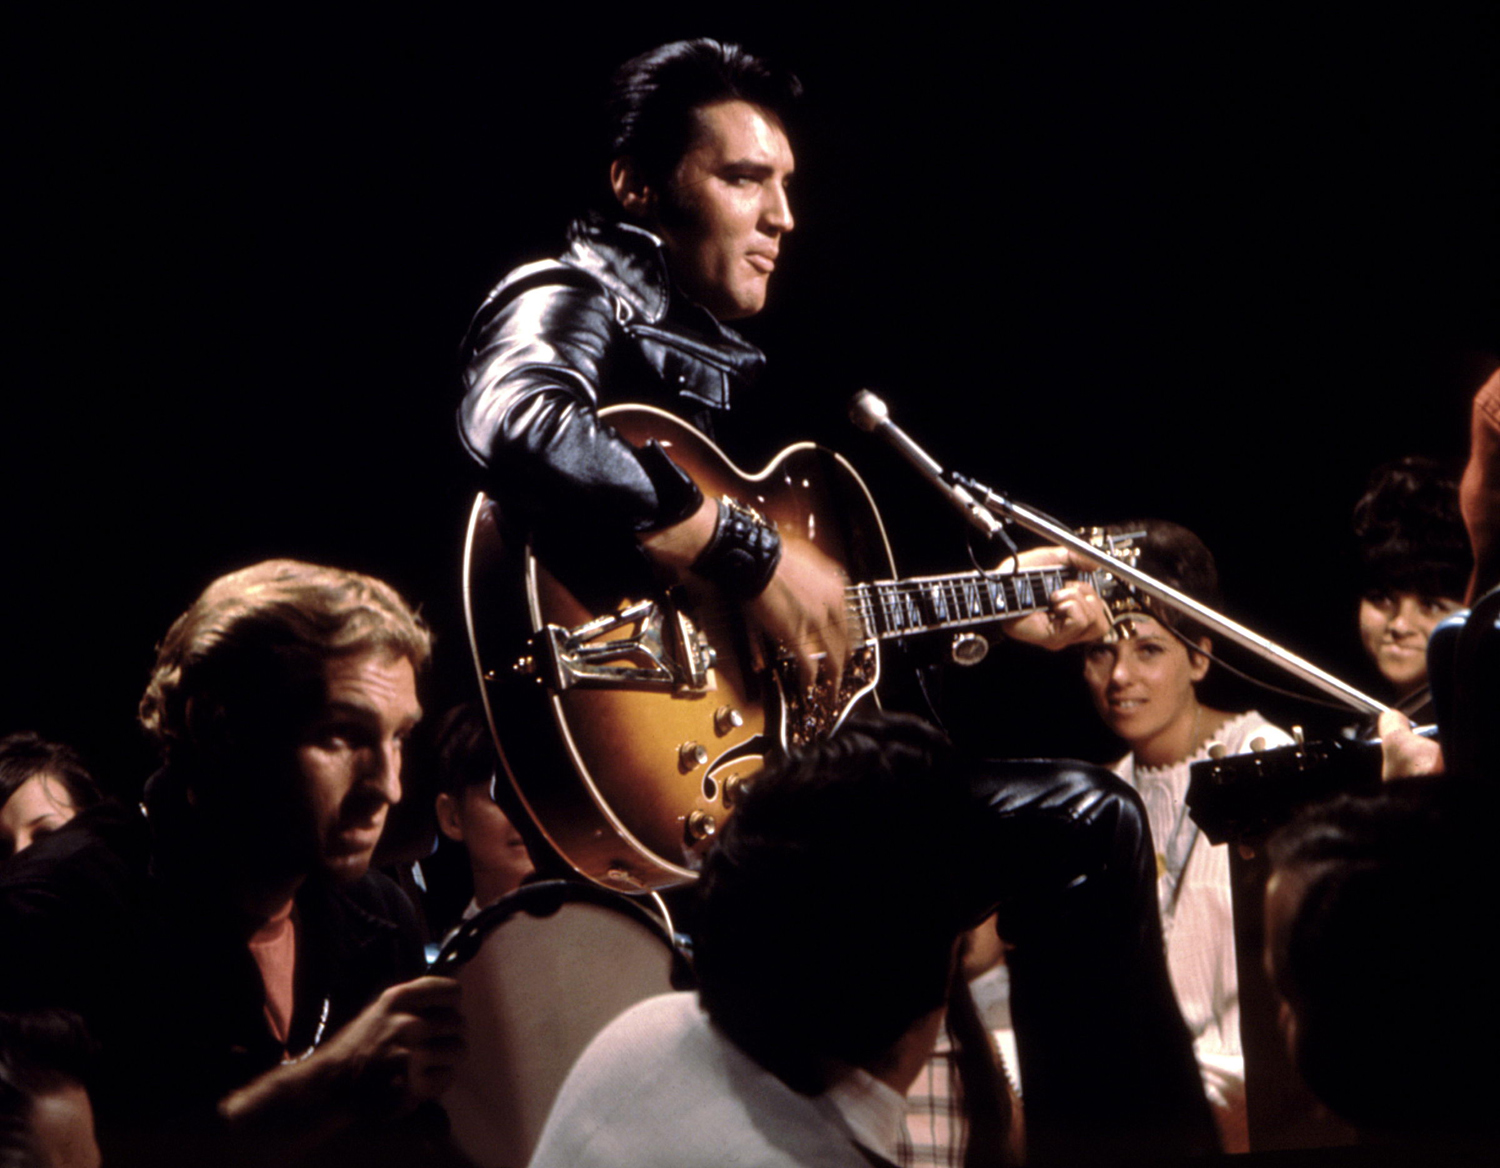 Элвис пресли клипы. Элвис Пресли 1968 Comeback. Elvis Presley 68 Comeback Special. Элвис Пресли концерт 1968. Элвис Пресли 68 Comeback.